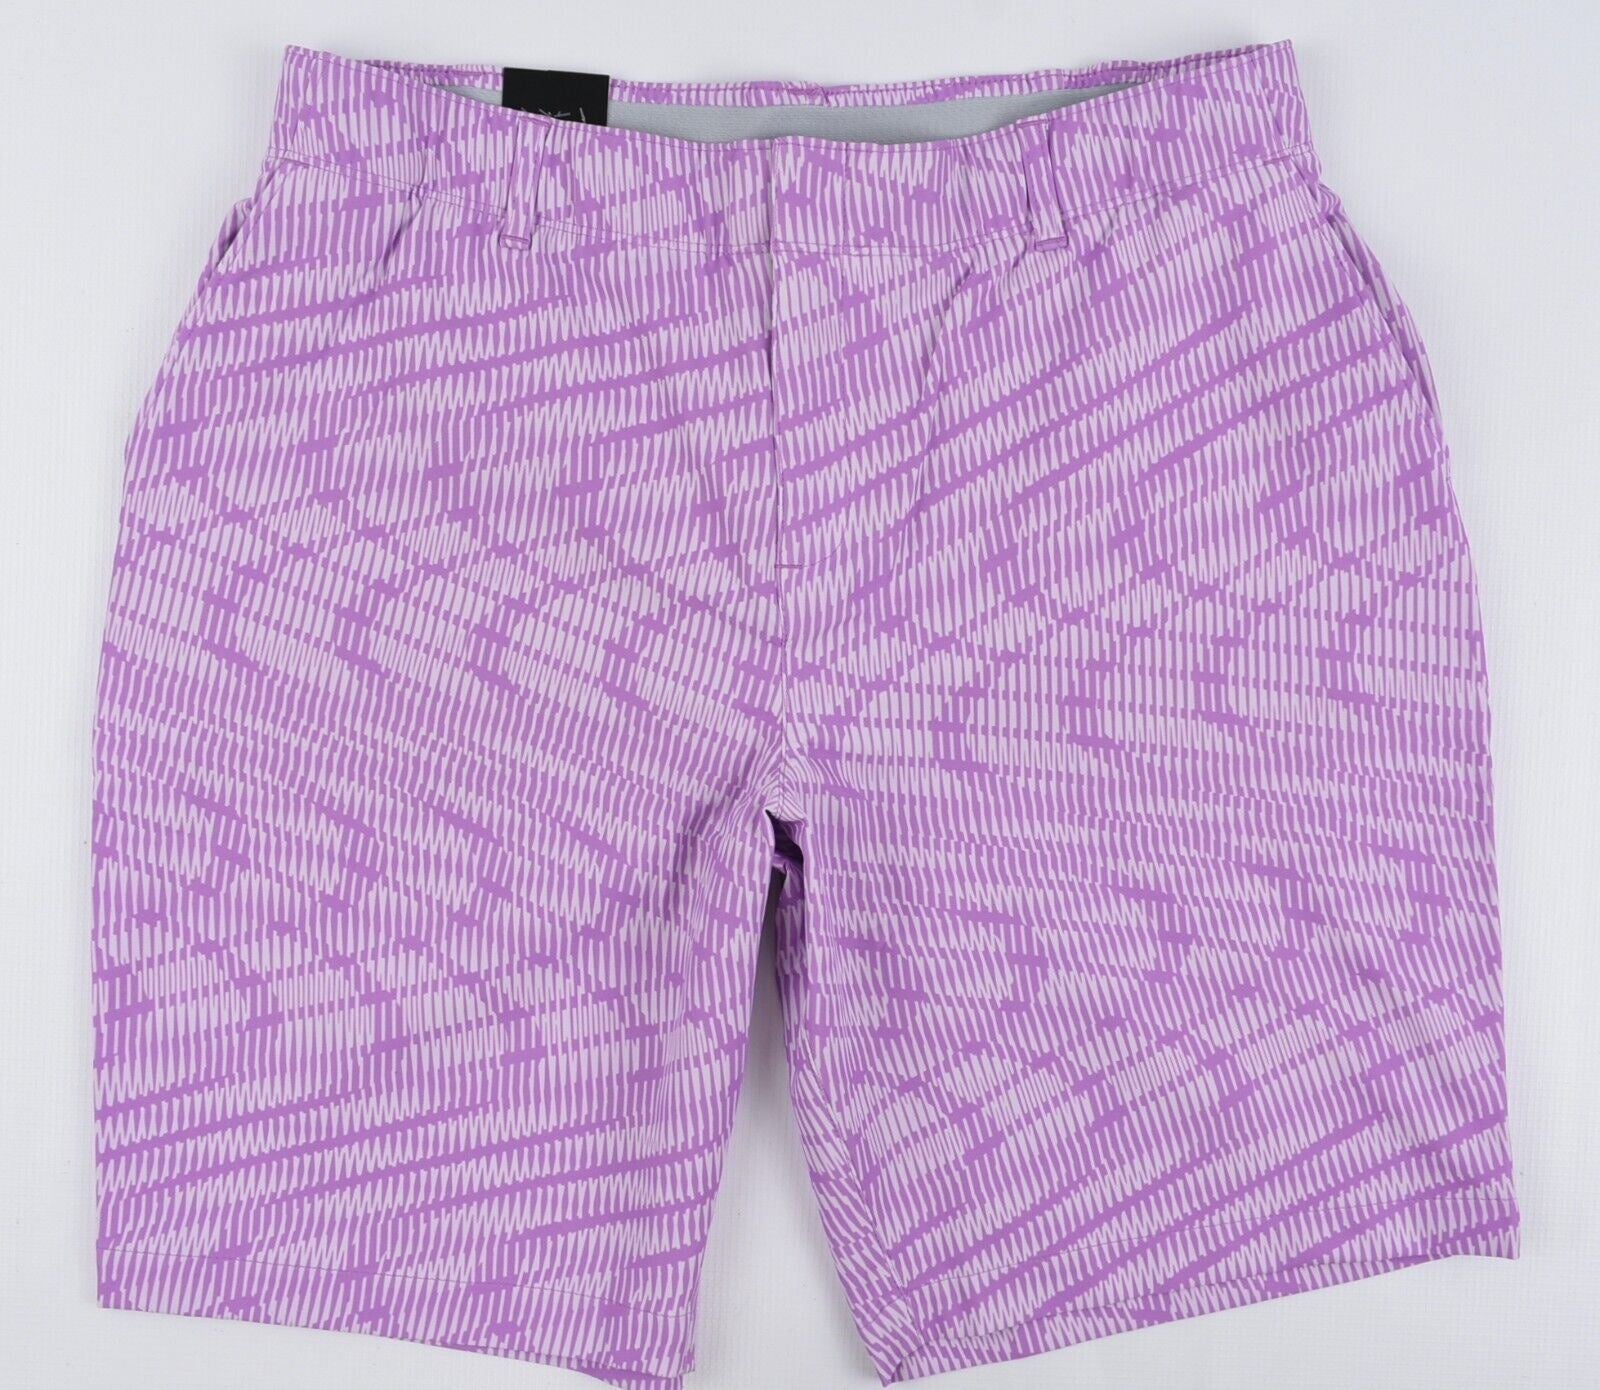 UNDER ARMOUR GOLF Women's 9" Shorts, Purple/Printed, size M (UK 12)